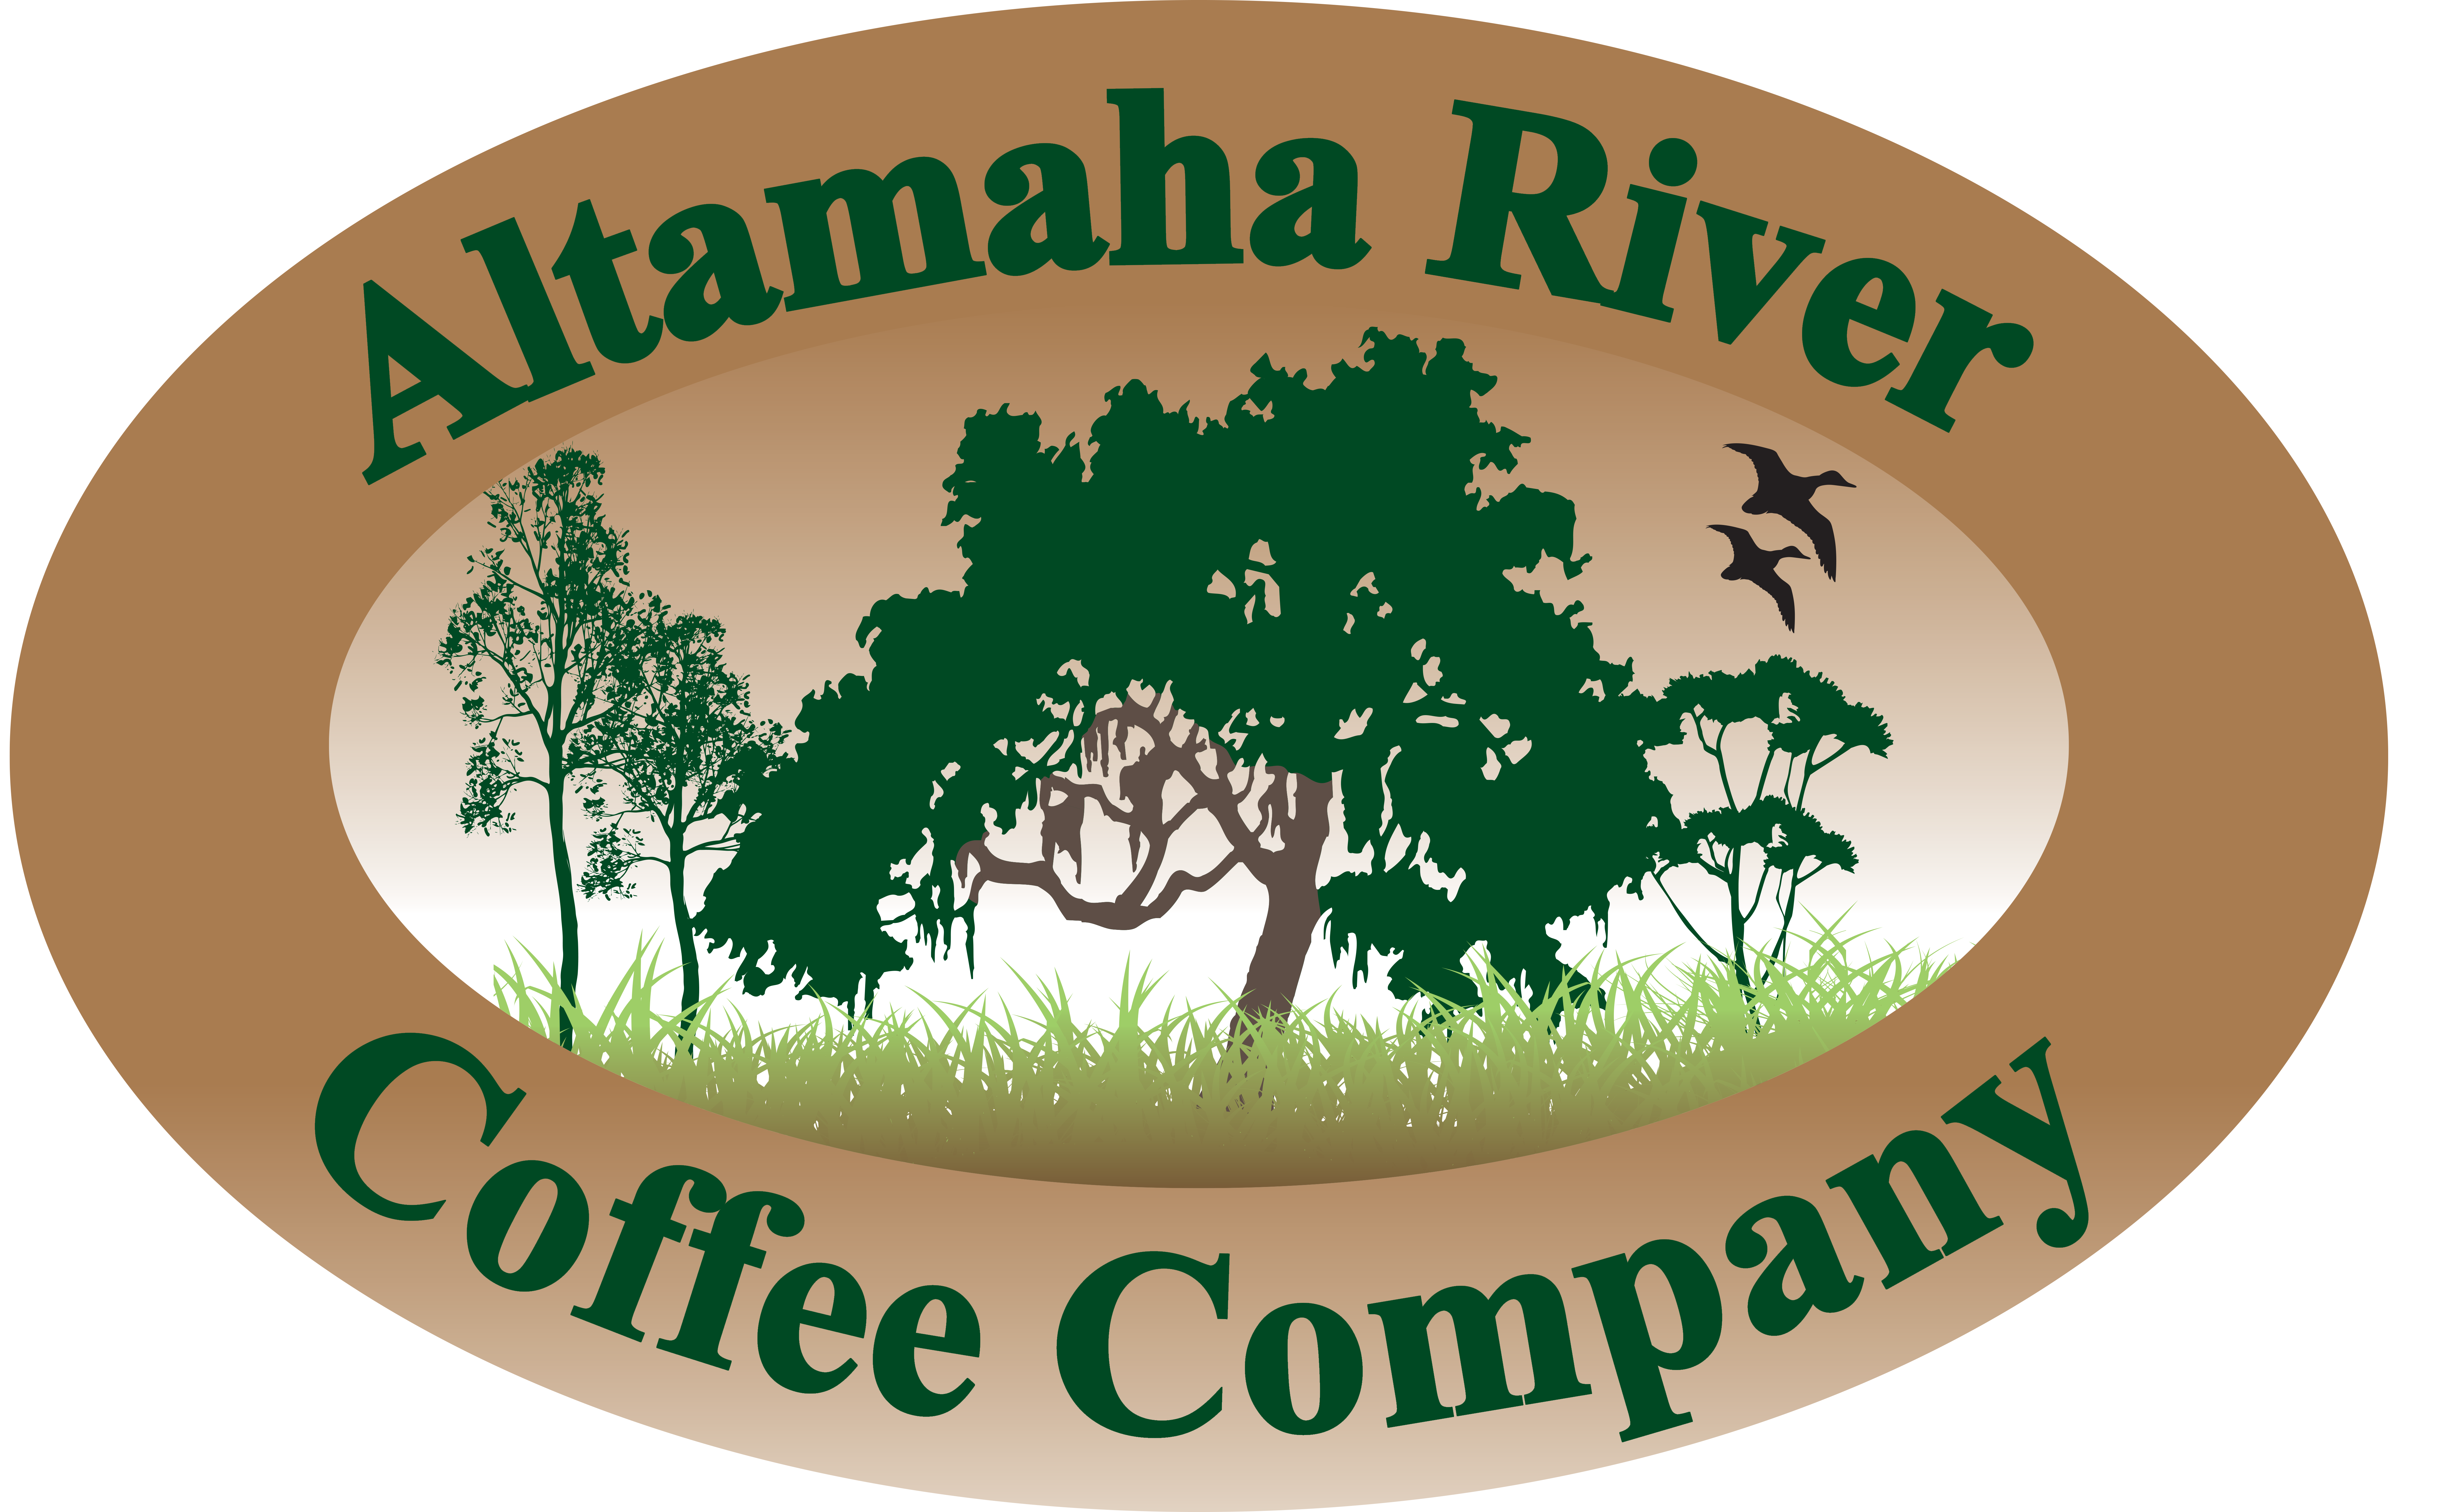 Altamaha River Coffee Company